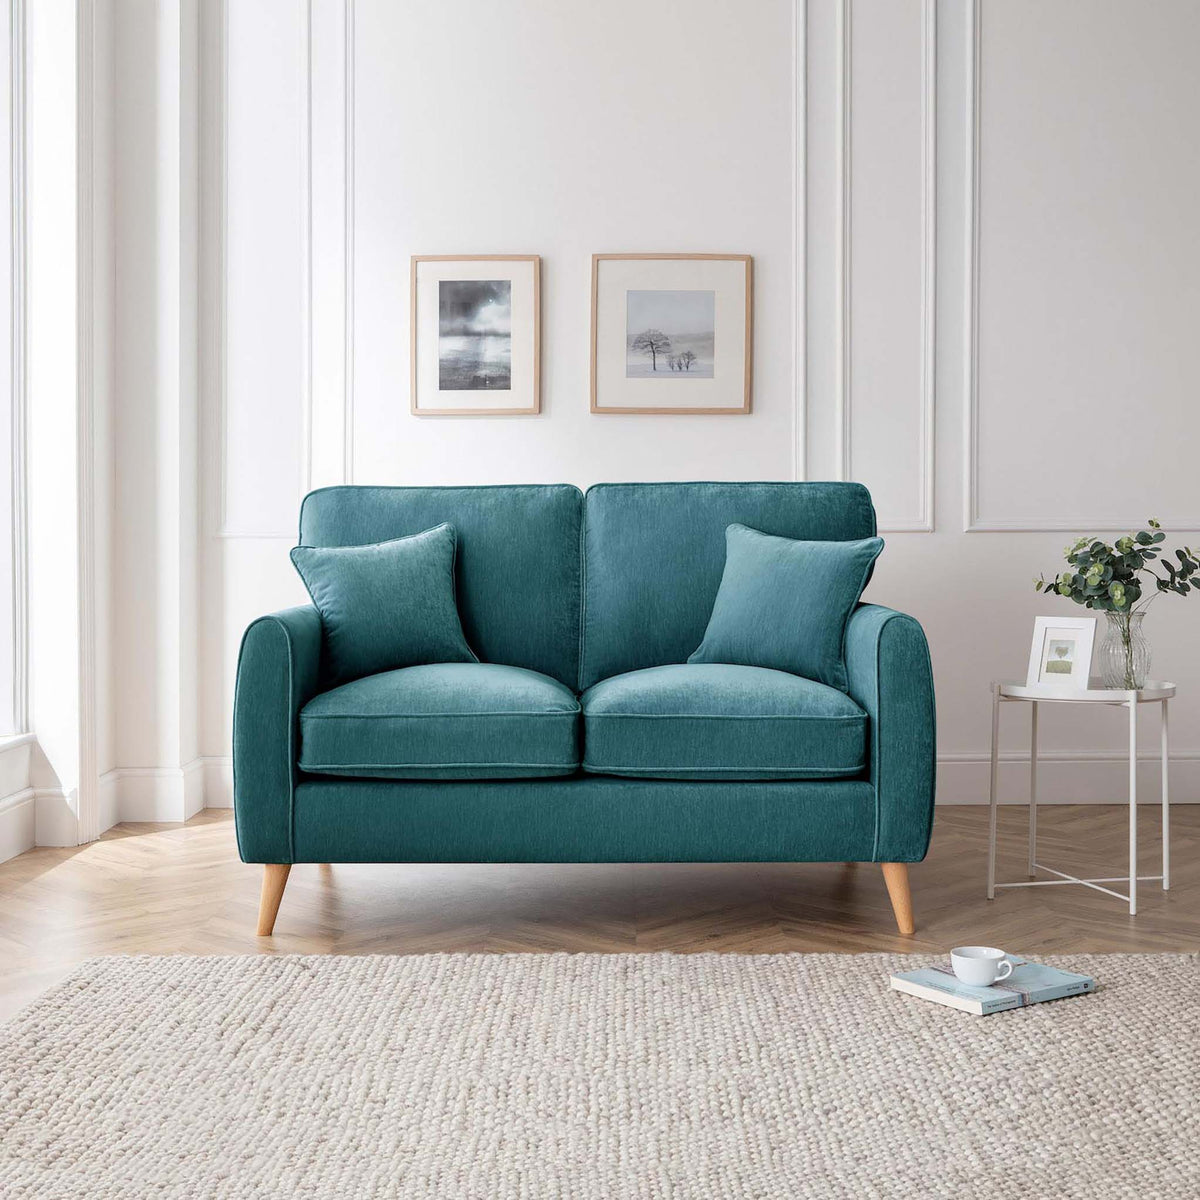 Ada Emerald Green 2 Seater Sofa from Roseland Furniture